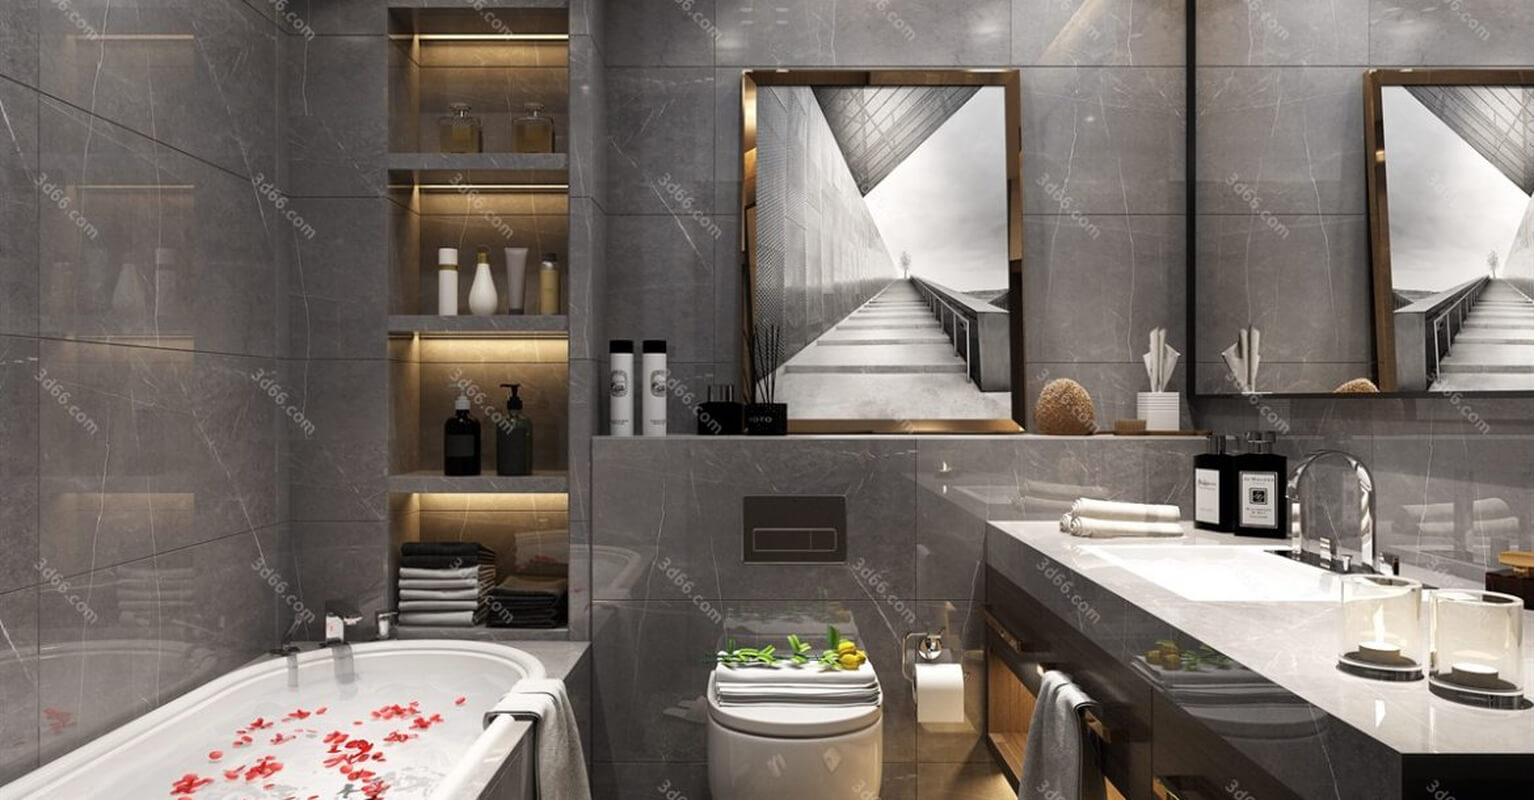 3D66 Toilet & Bathroom Interior 2019 Style (02)